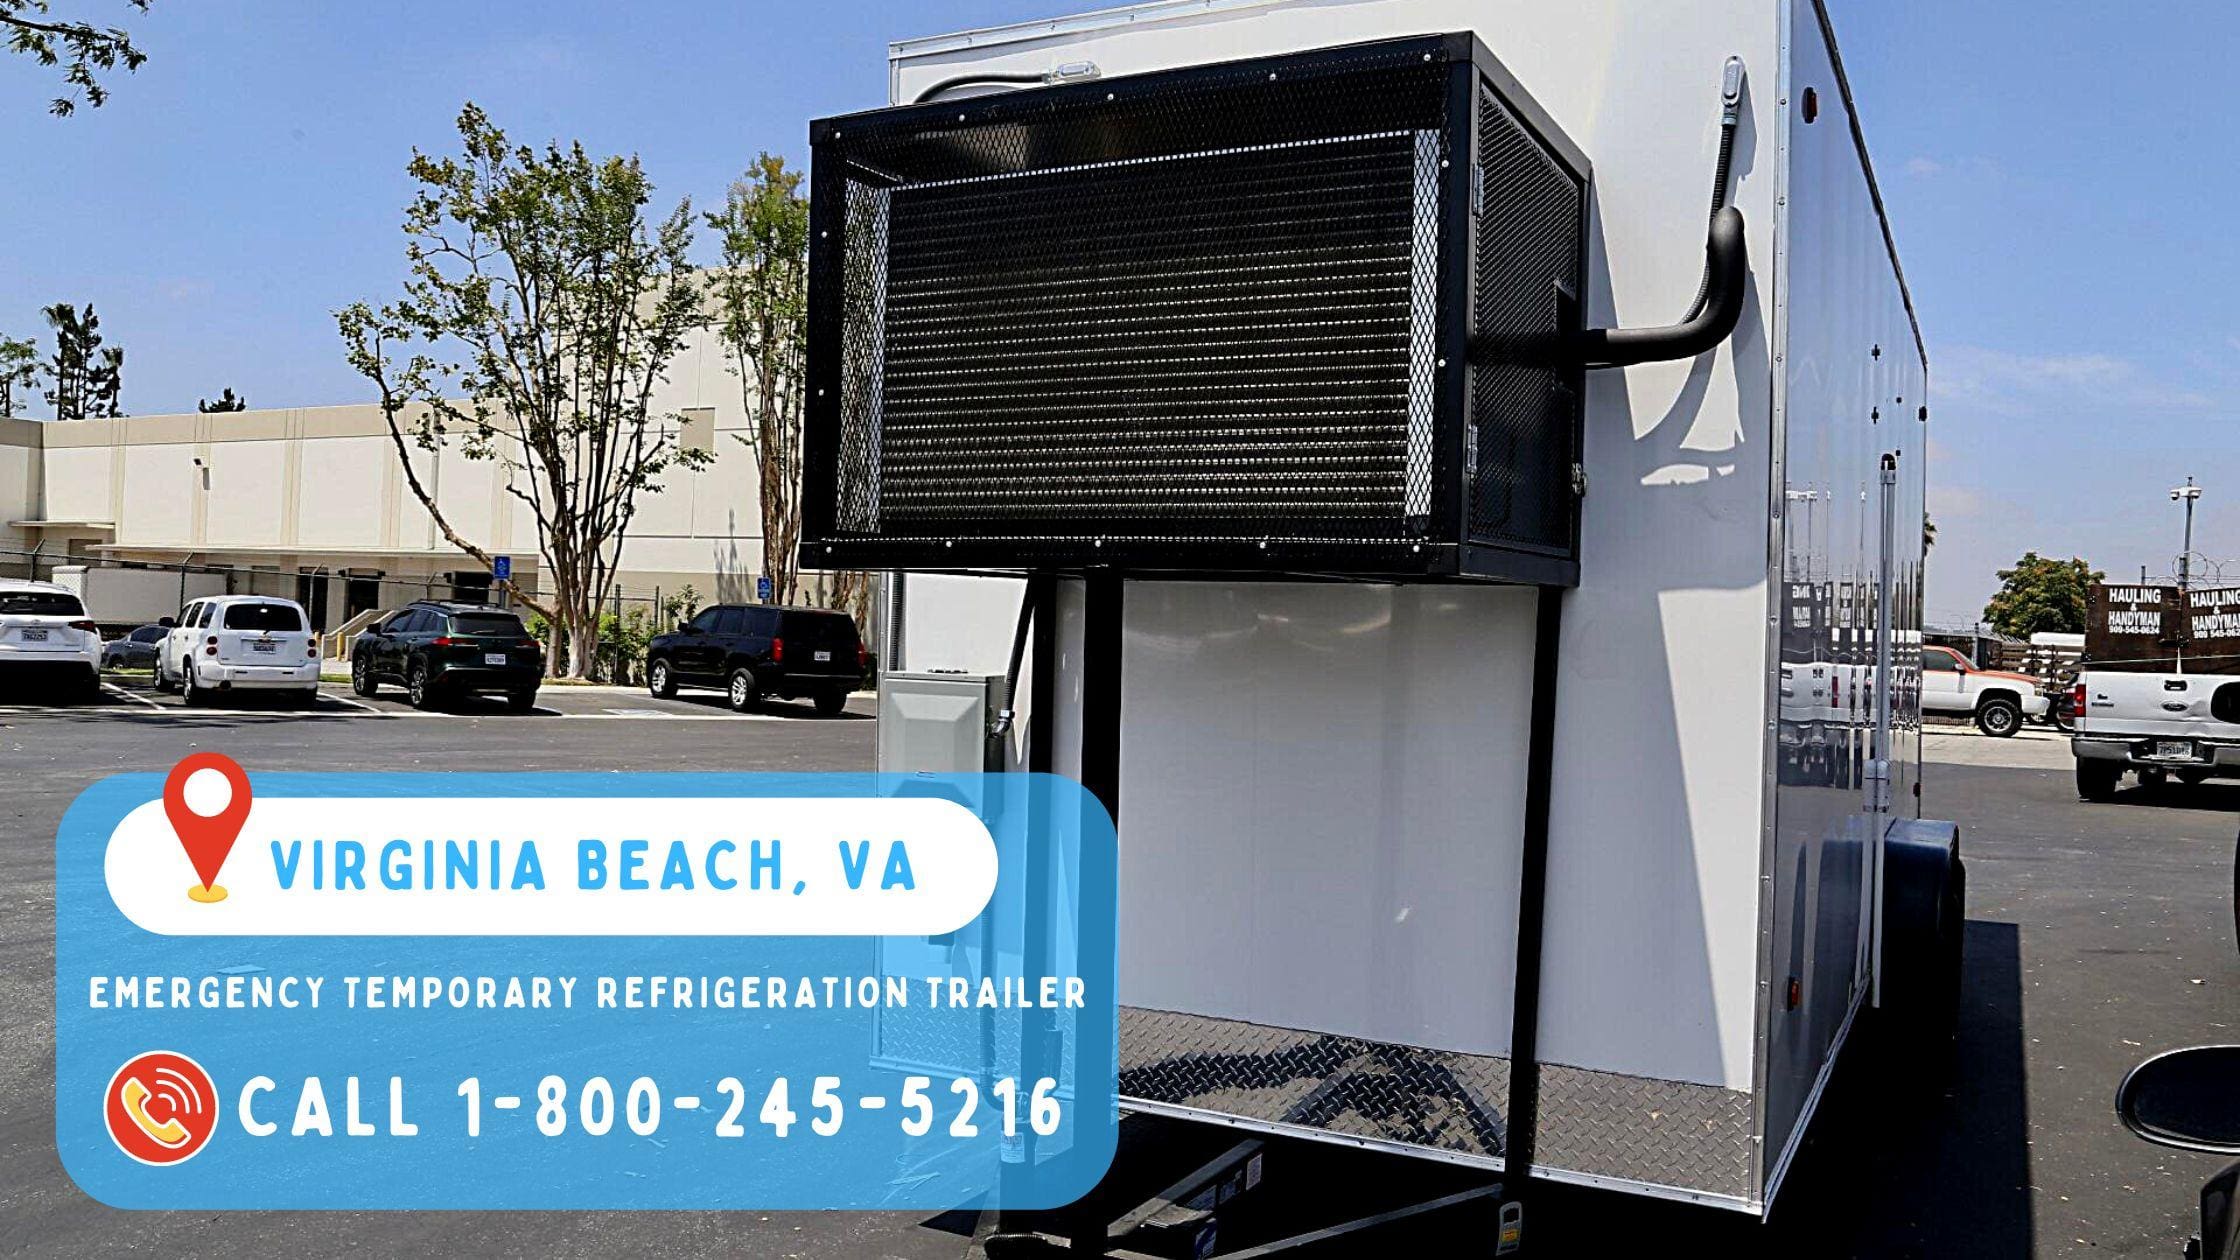 Emergency Temporary refrigeration trailer in Virginia Beach